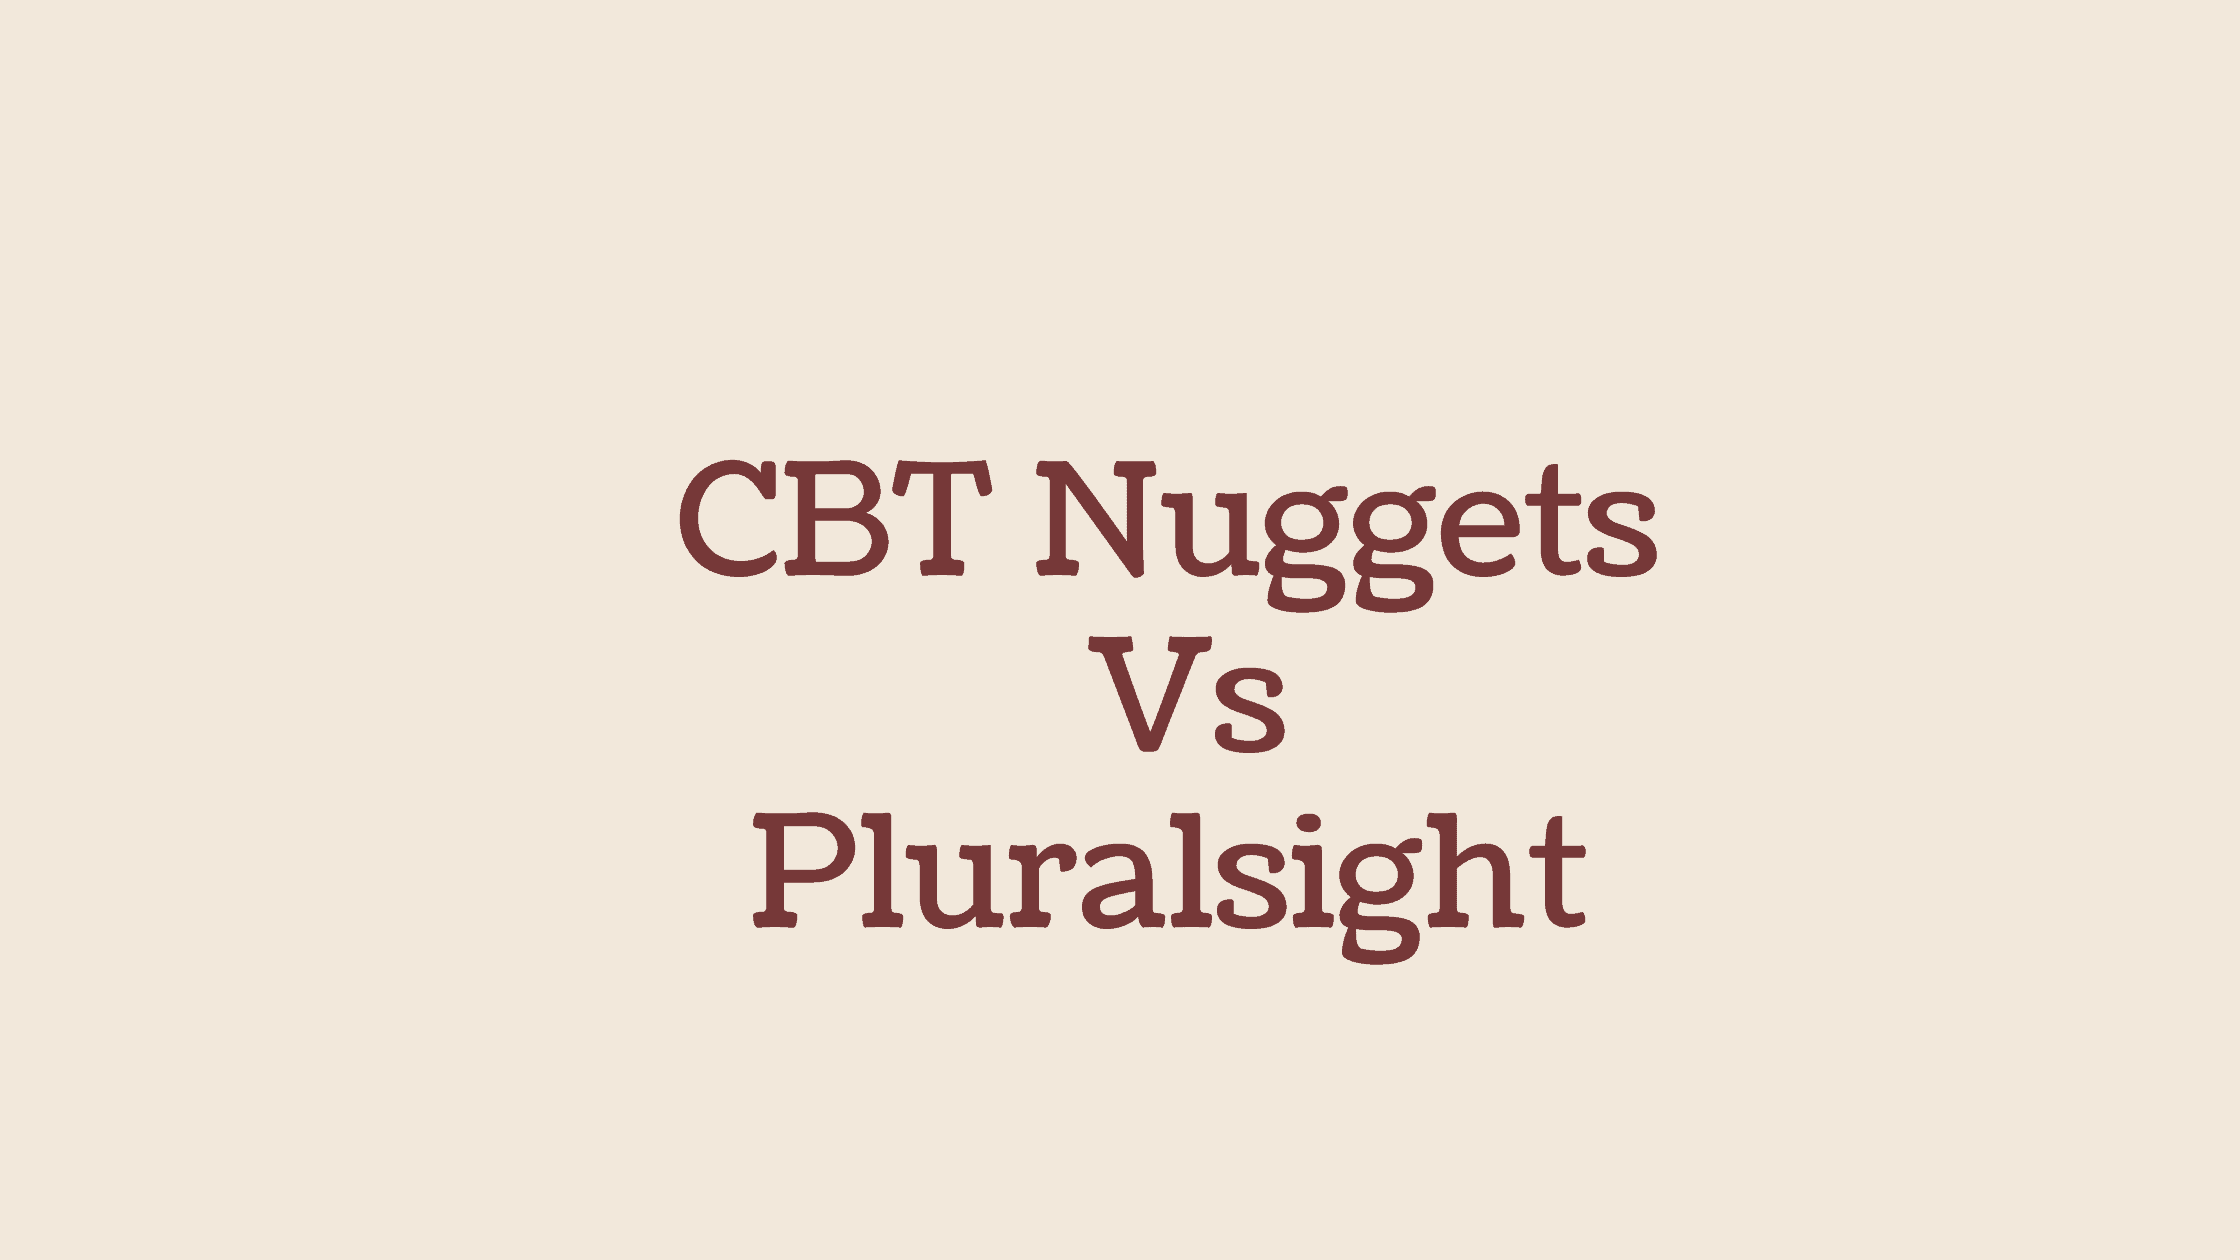 cbt nuggets vs pluralsight mcsa reddit